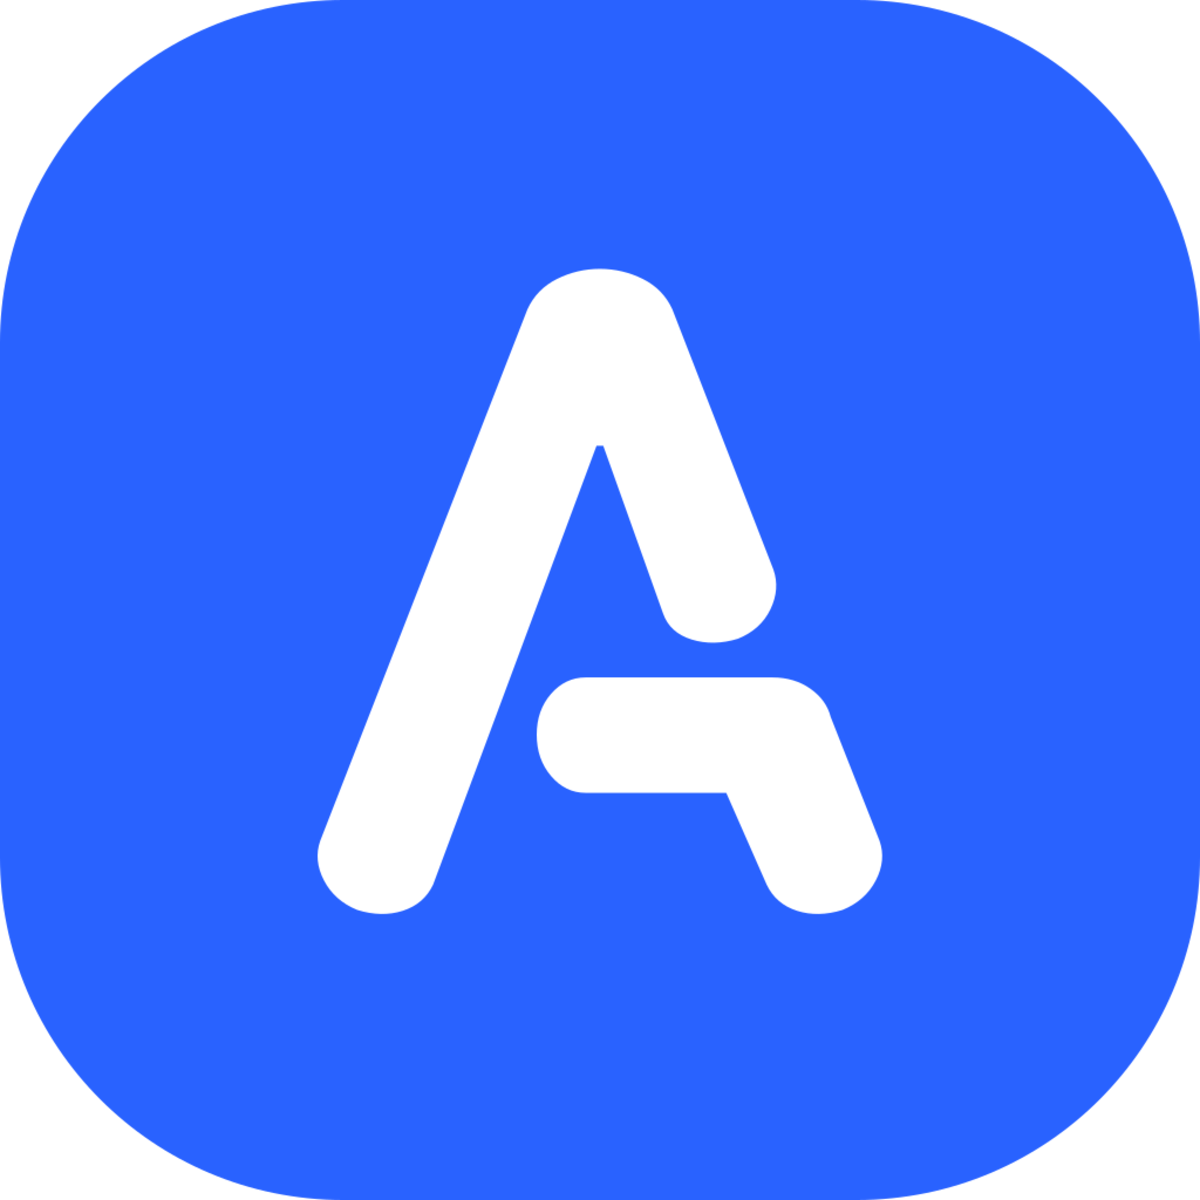 AppMe ‑ Mobile App Builder